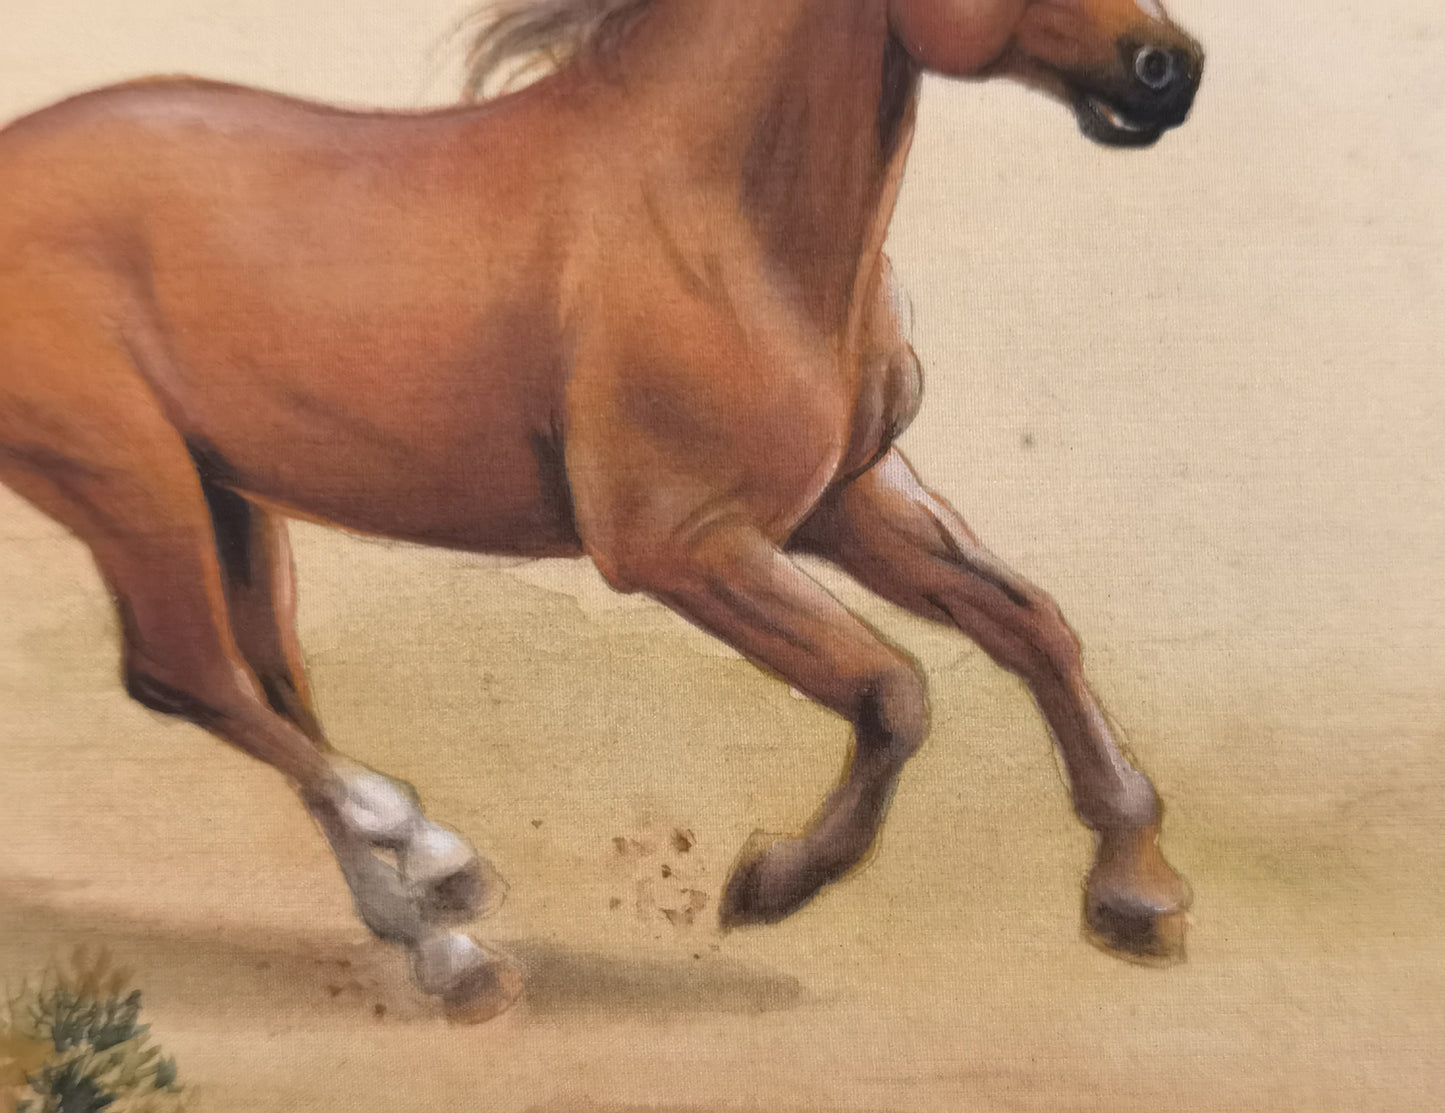 Brown Horse Perception Handmade Art Printing Animal Running Galloping with Wood Frame